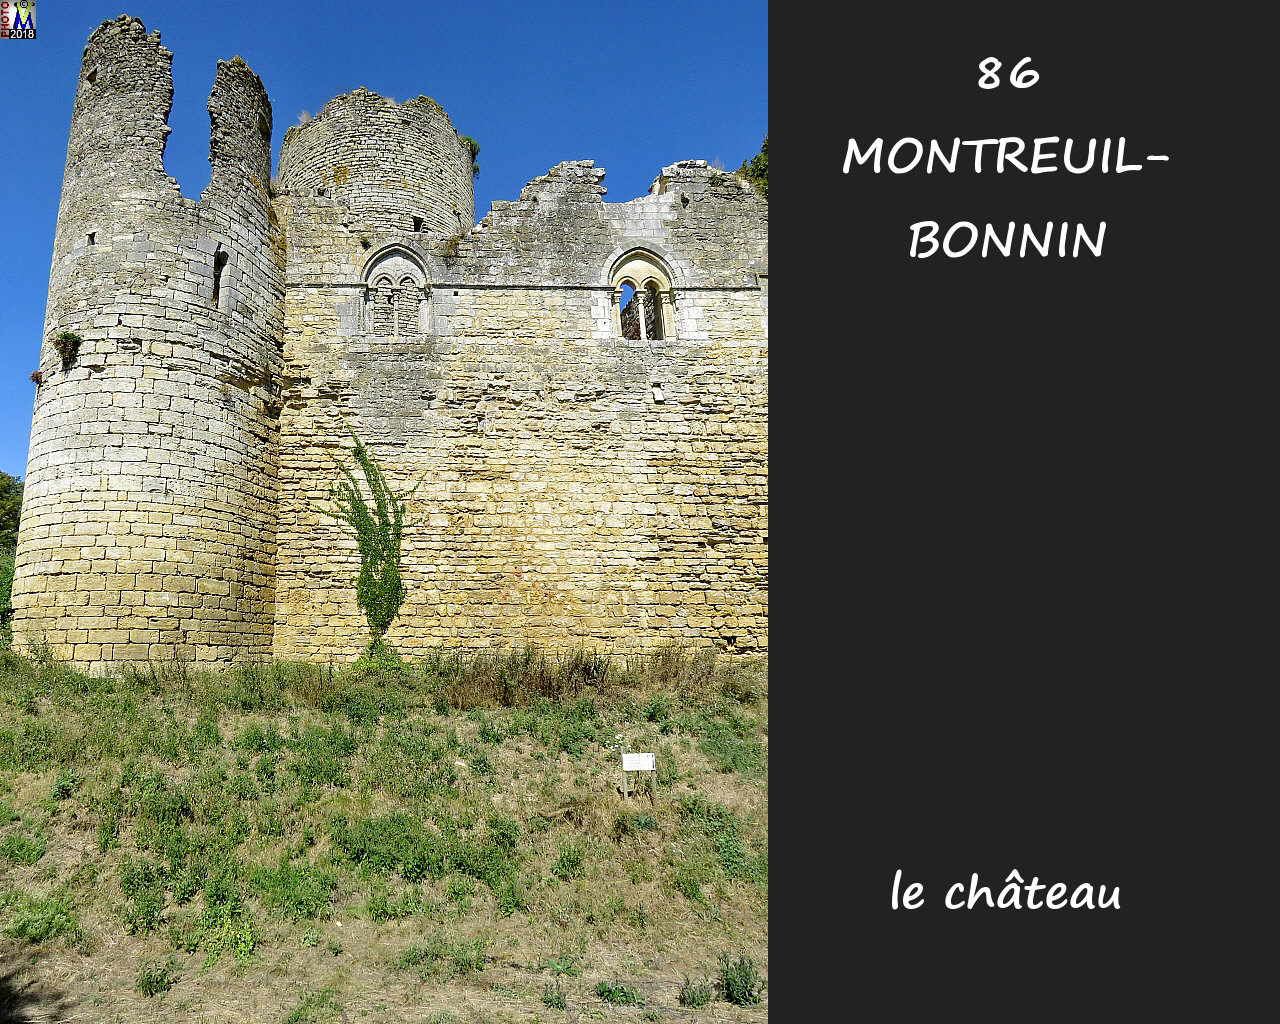 86MONTREUIL-BONNIN_chateau_1014.jpg